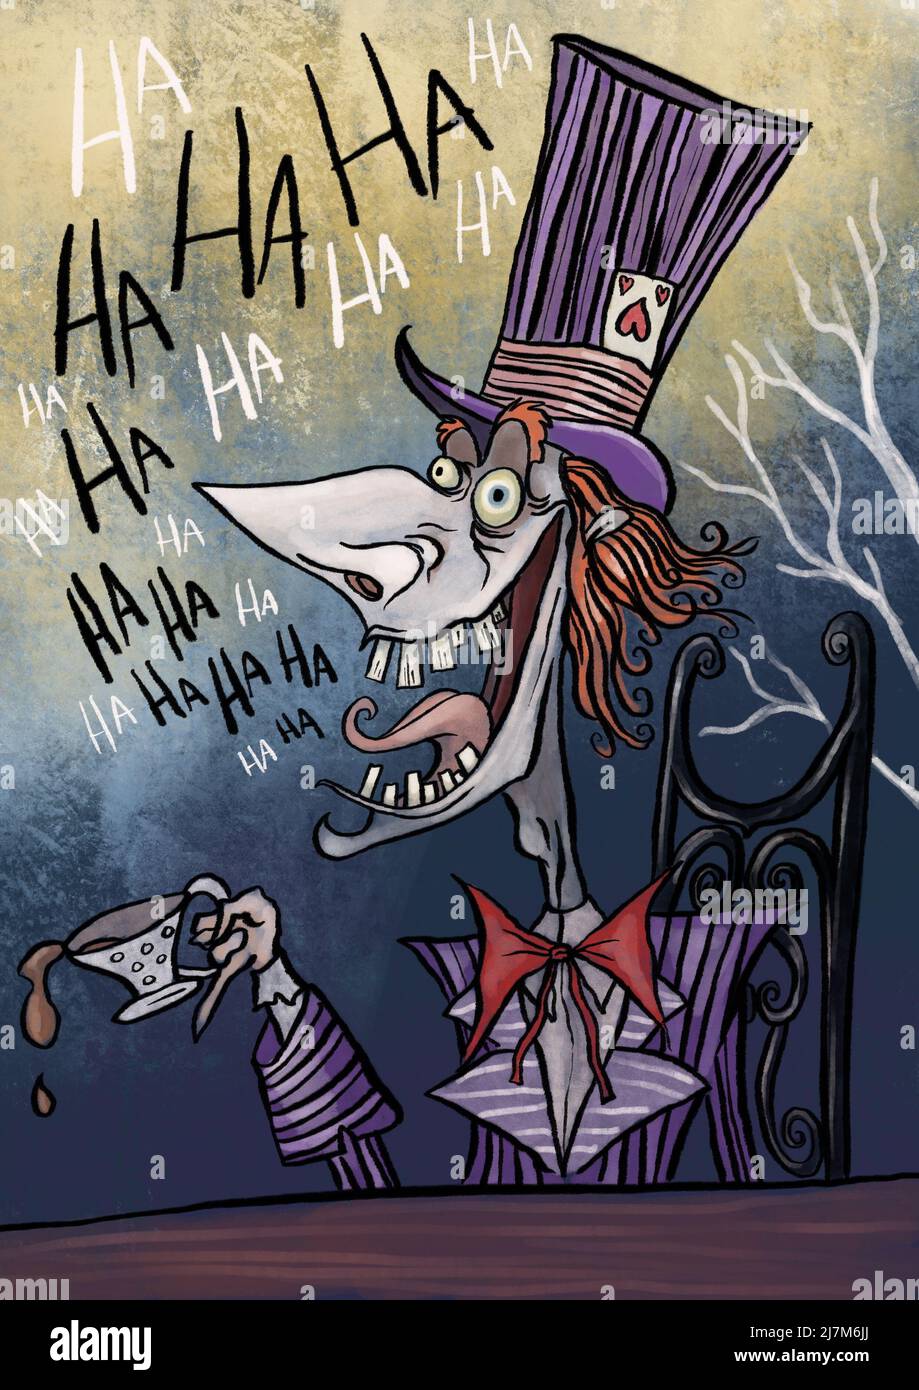 The Mad Hatter Alice in Wonderland illustration Stock Photo